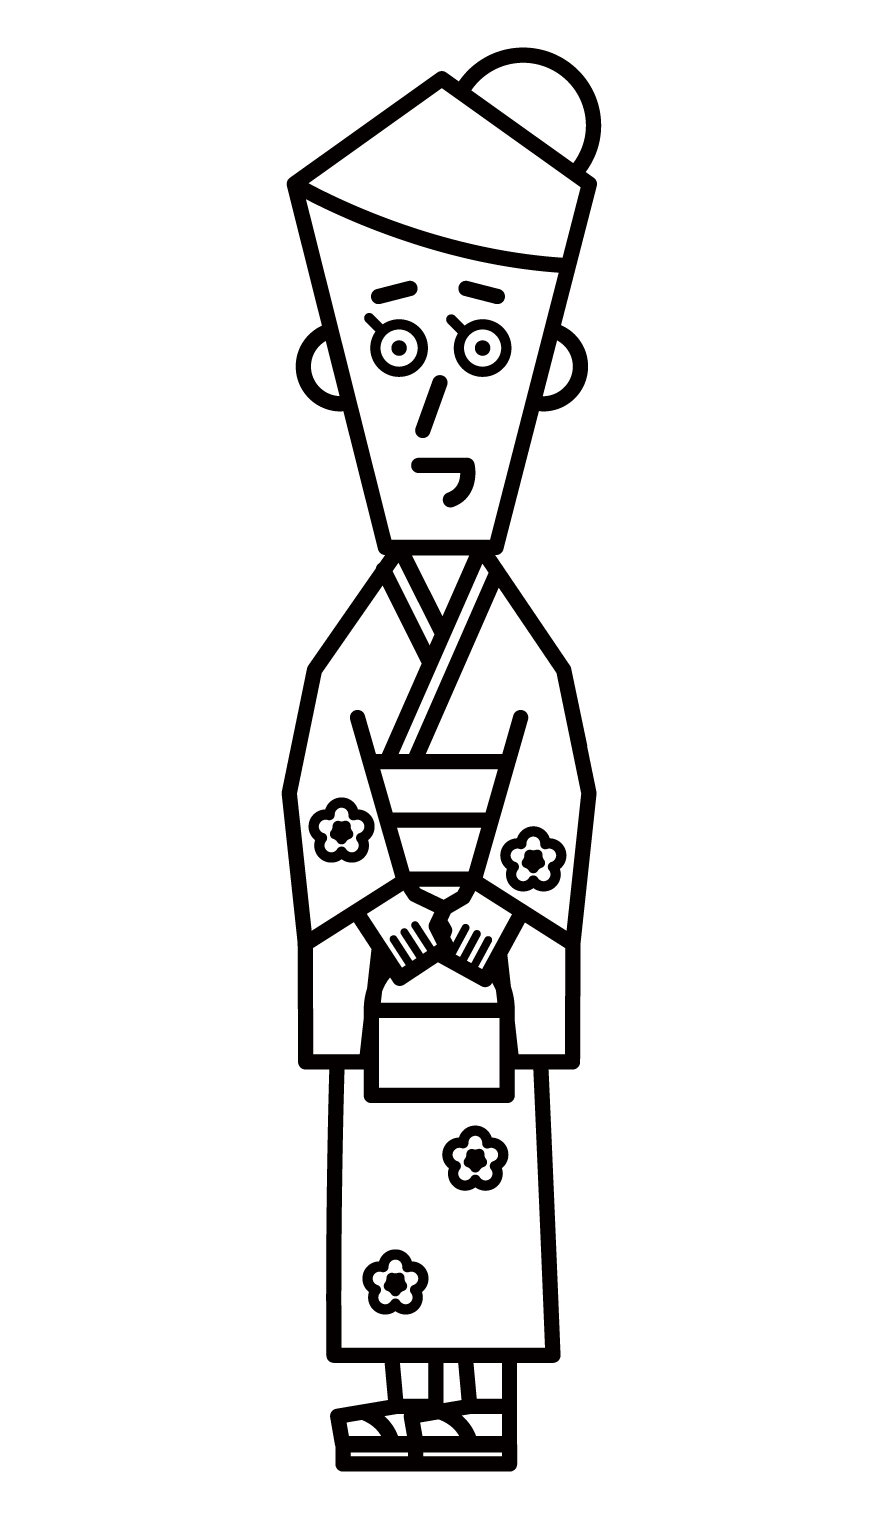 Illustration of a person (female) wearing a kimono